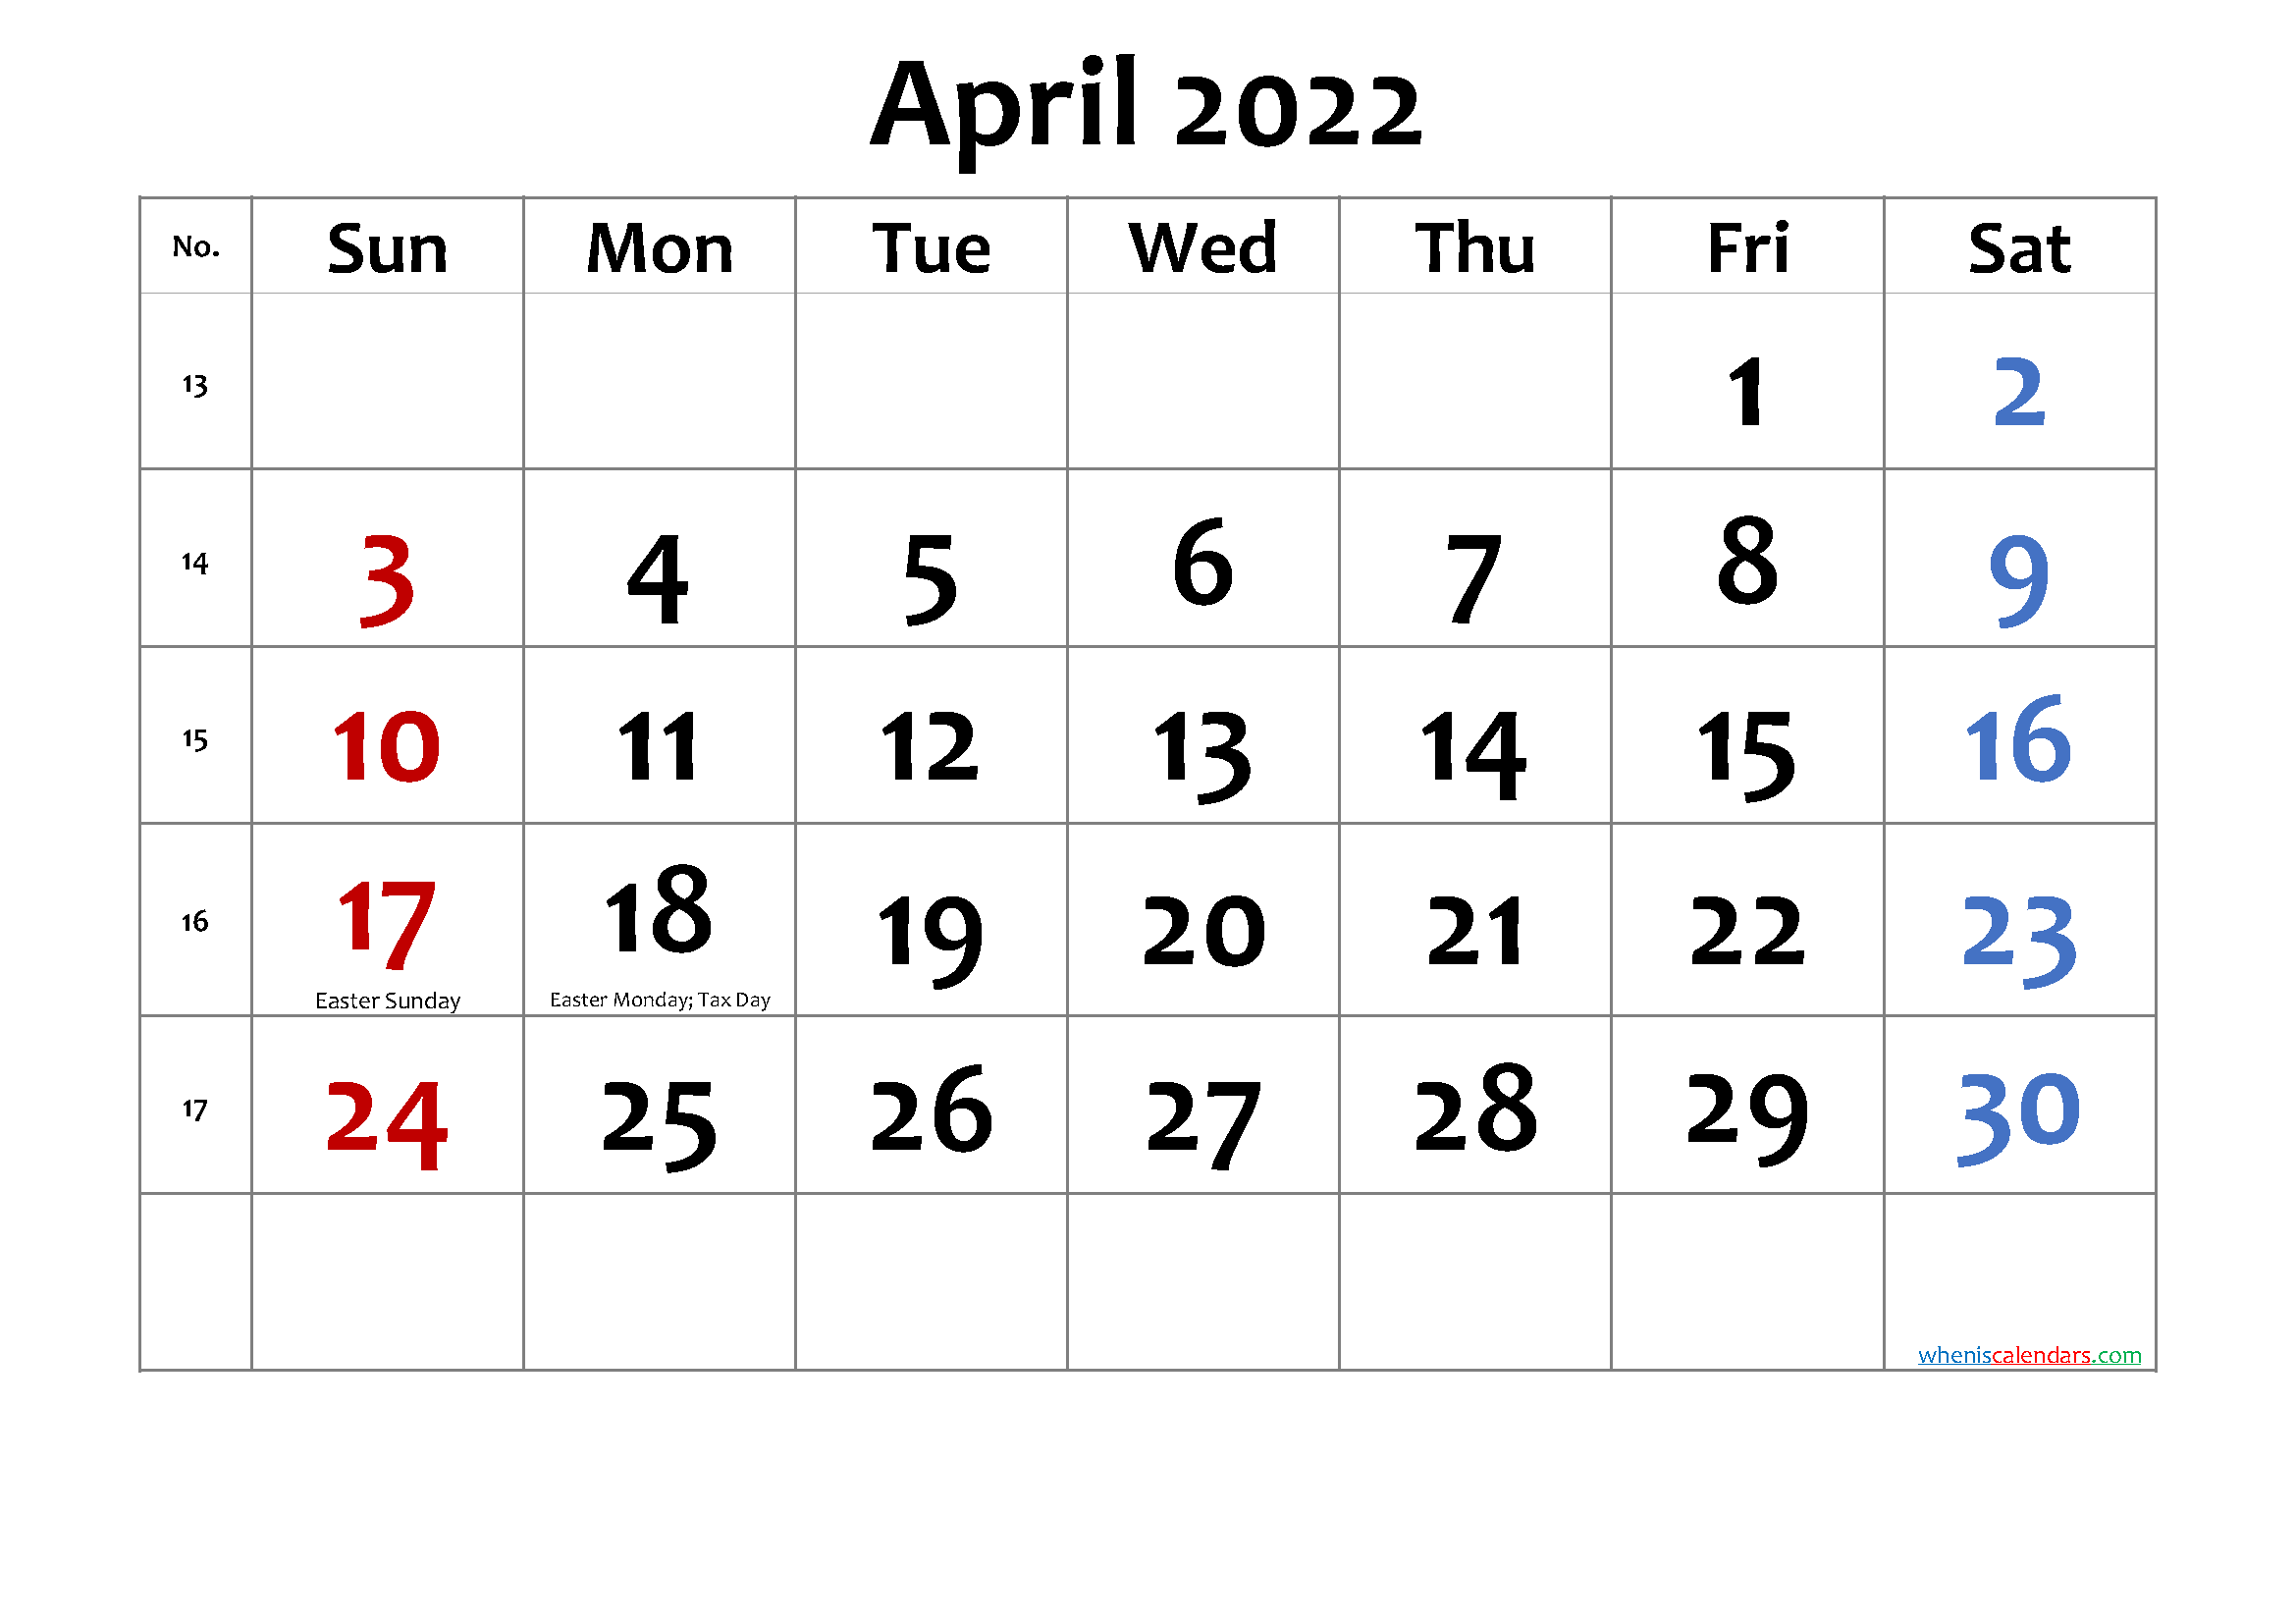 19 april 2022 holiday